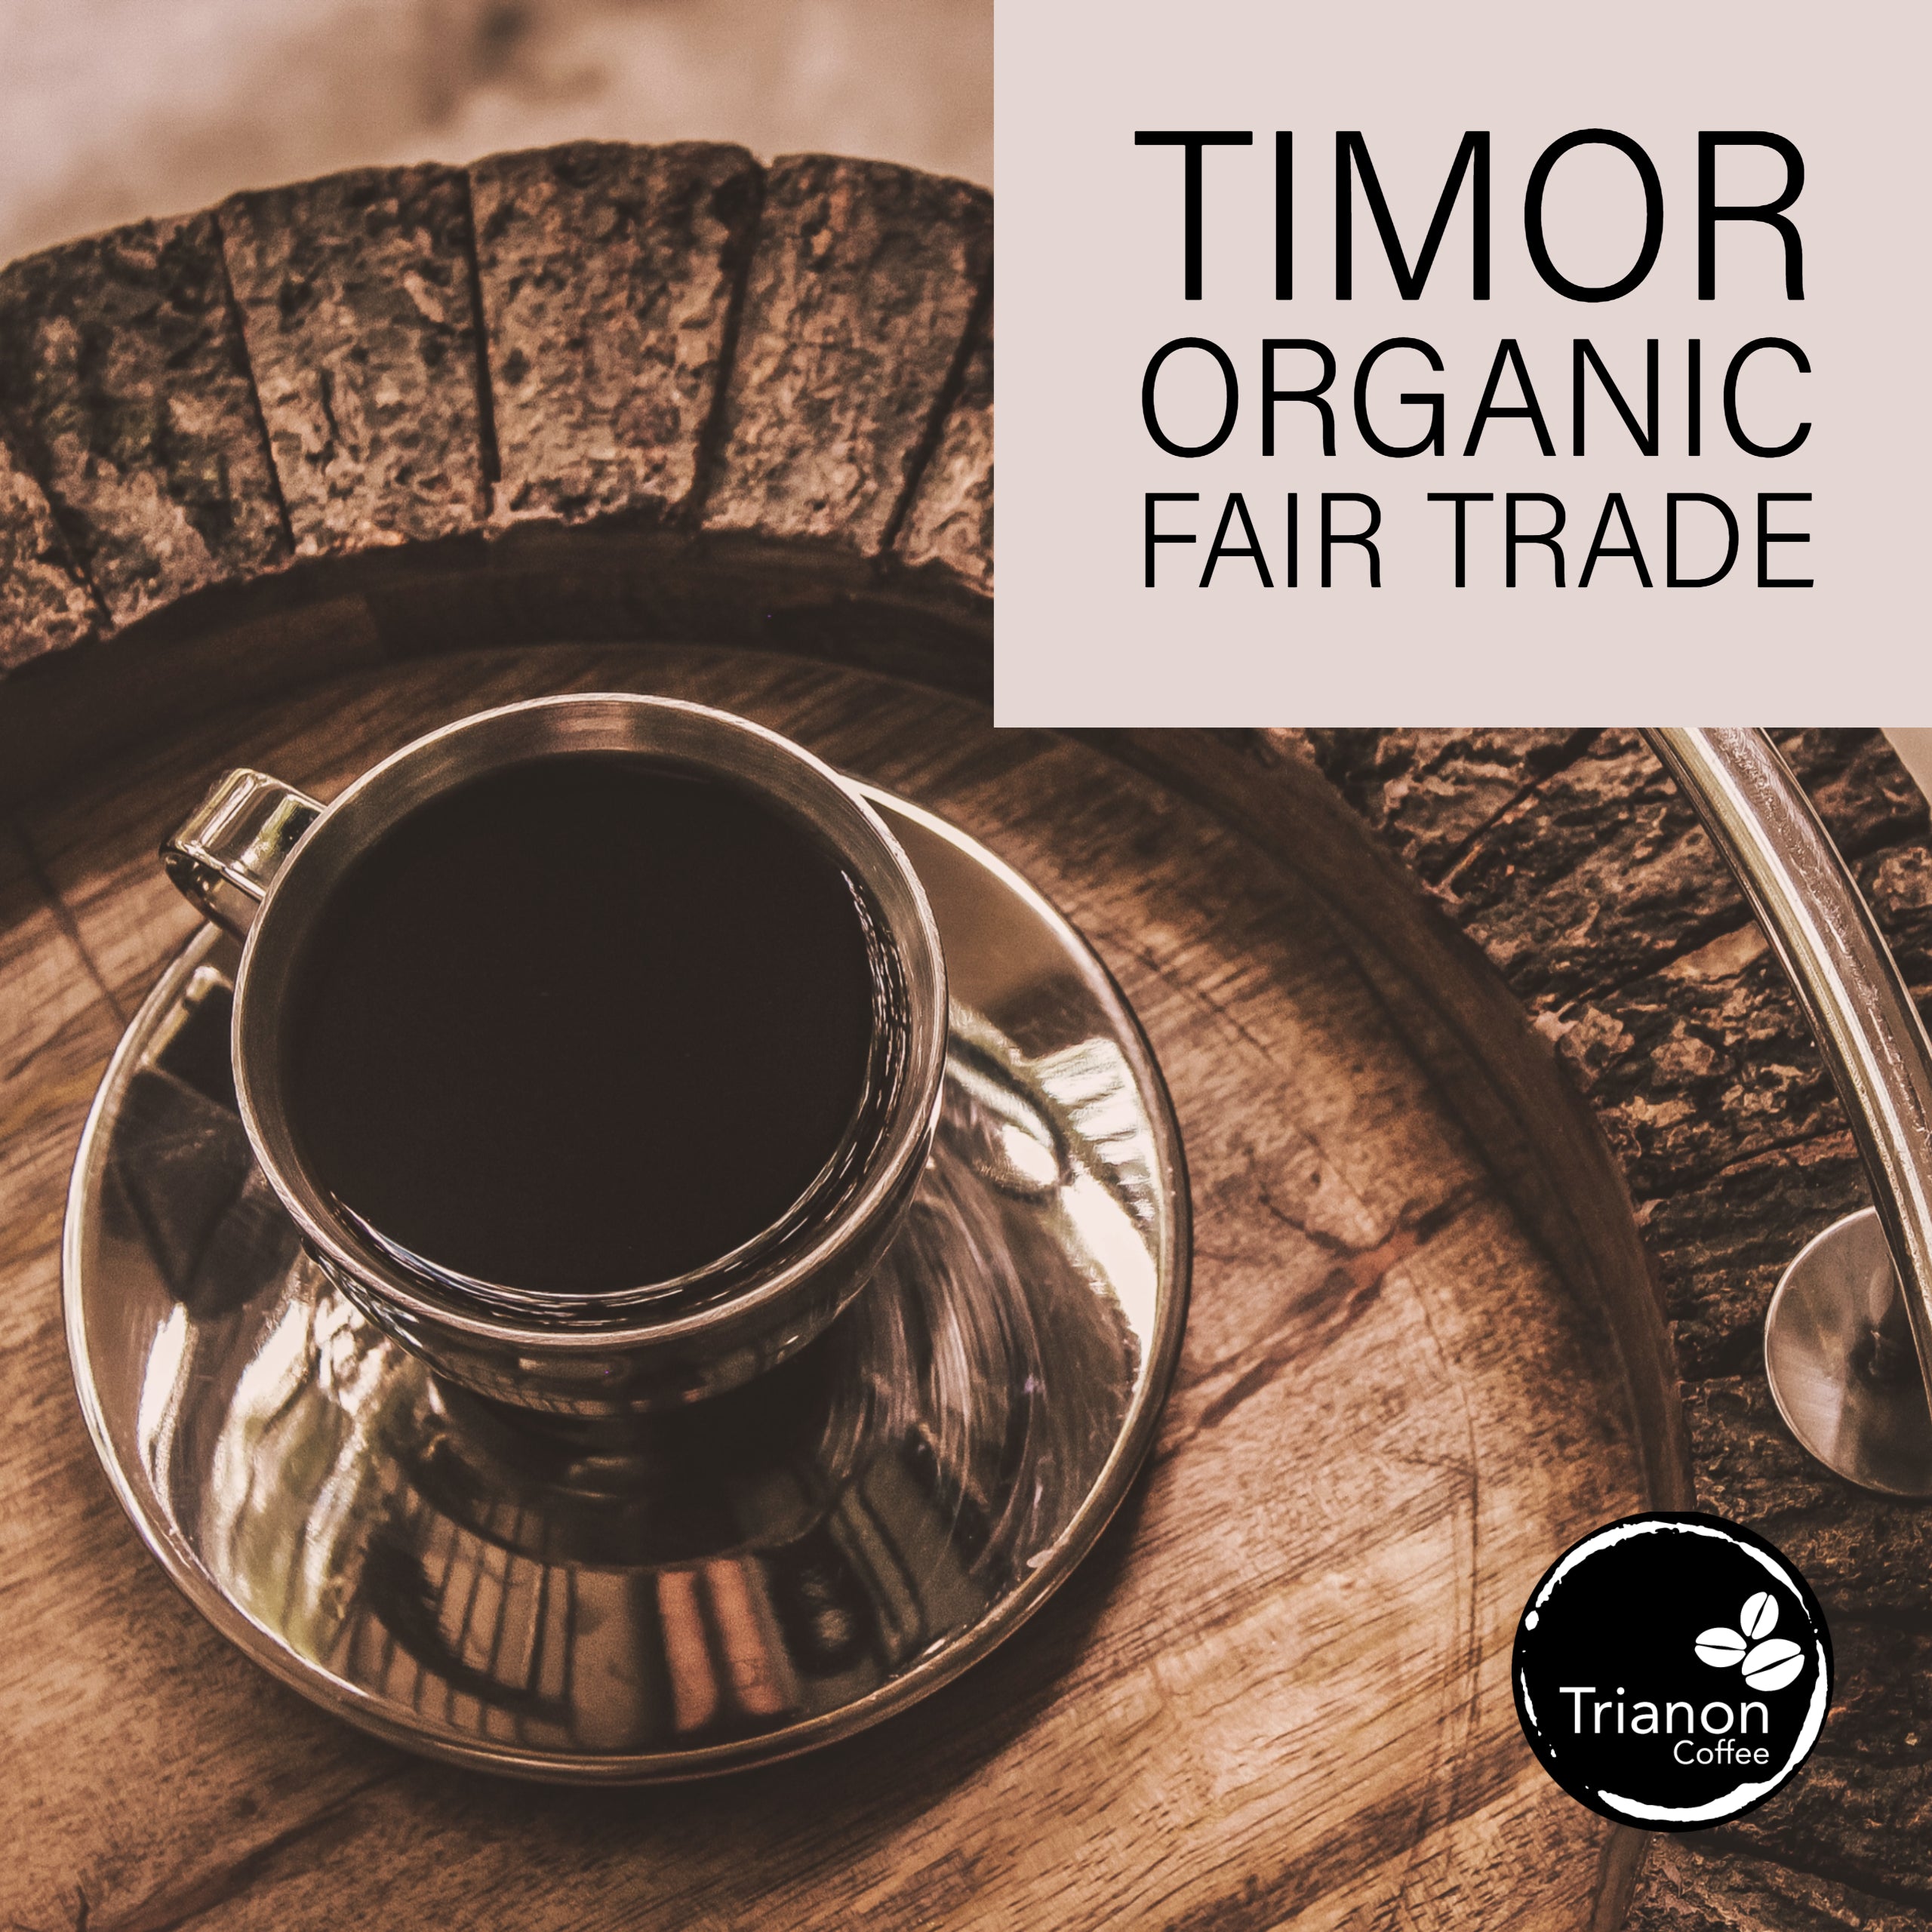 Timor Organic Fair Trade